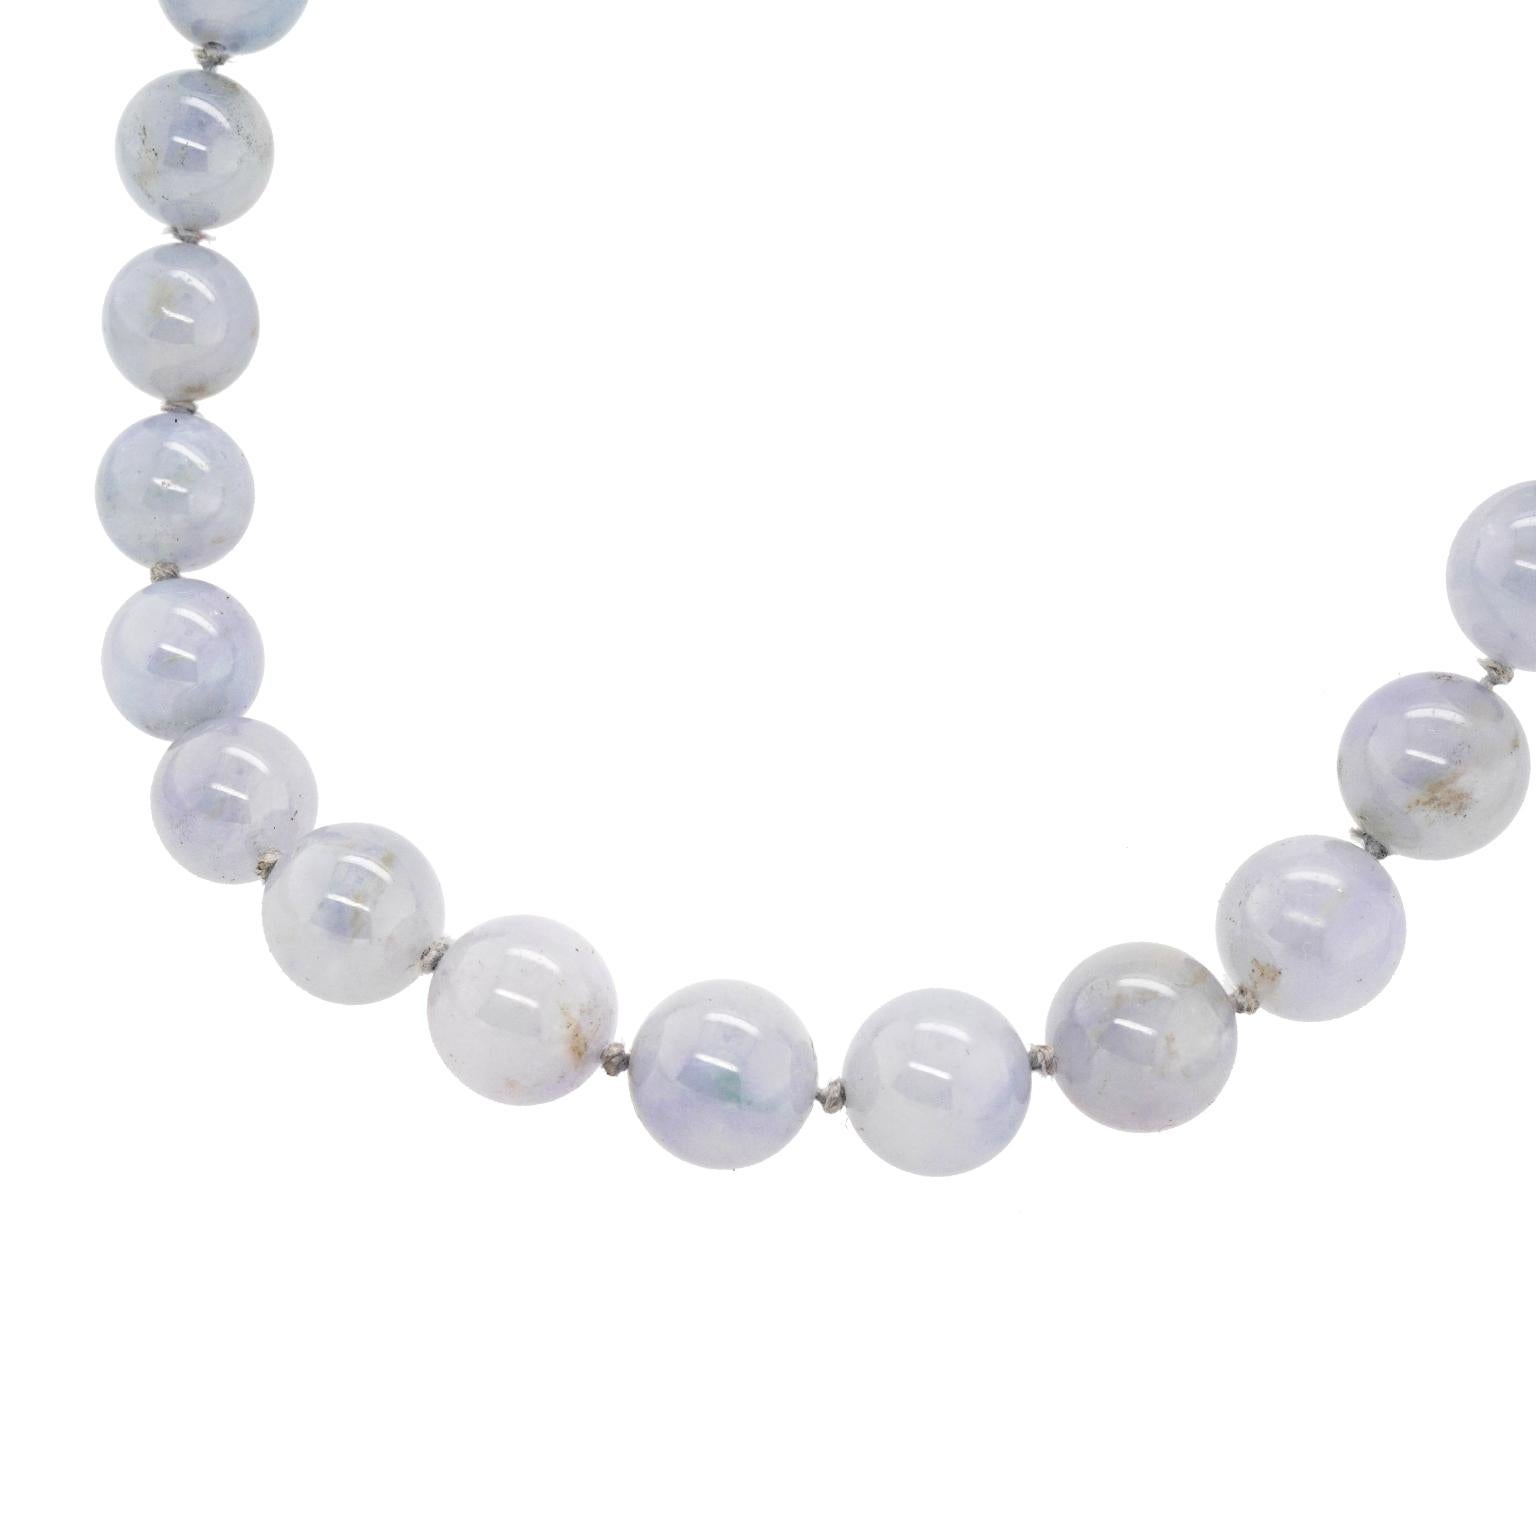 Gumps Strand of Lavender Jade Beads 4